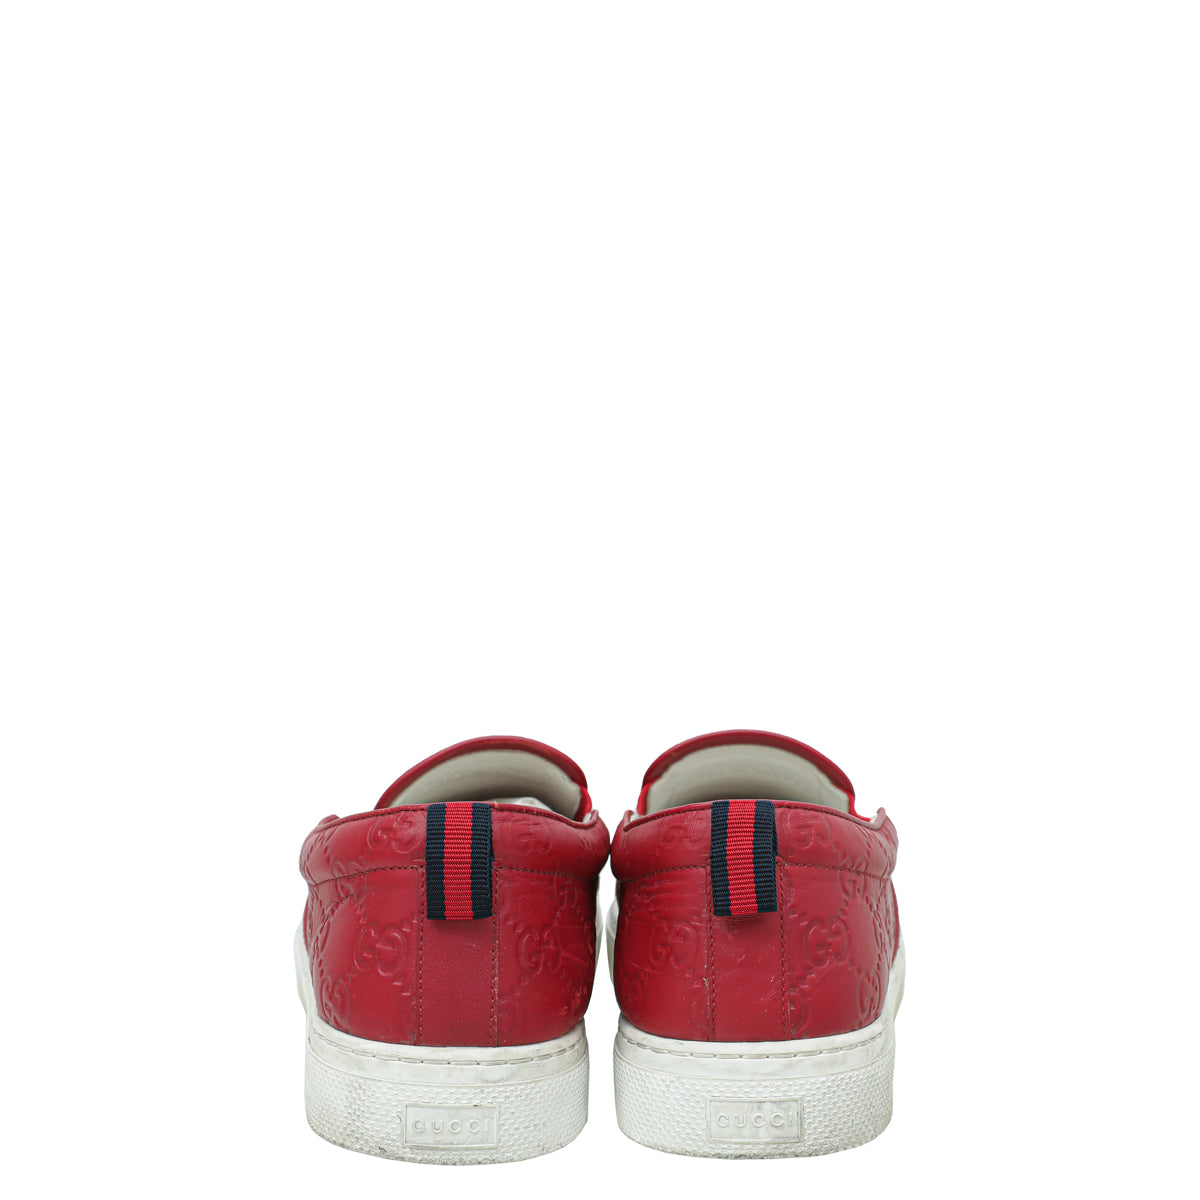 Gucci Red Guccissima Web Slip On Sneakers 11.5